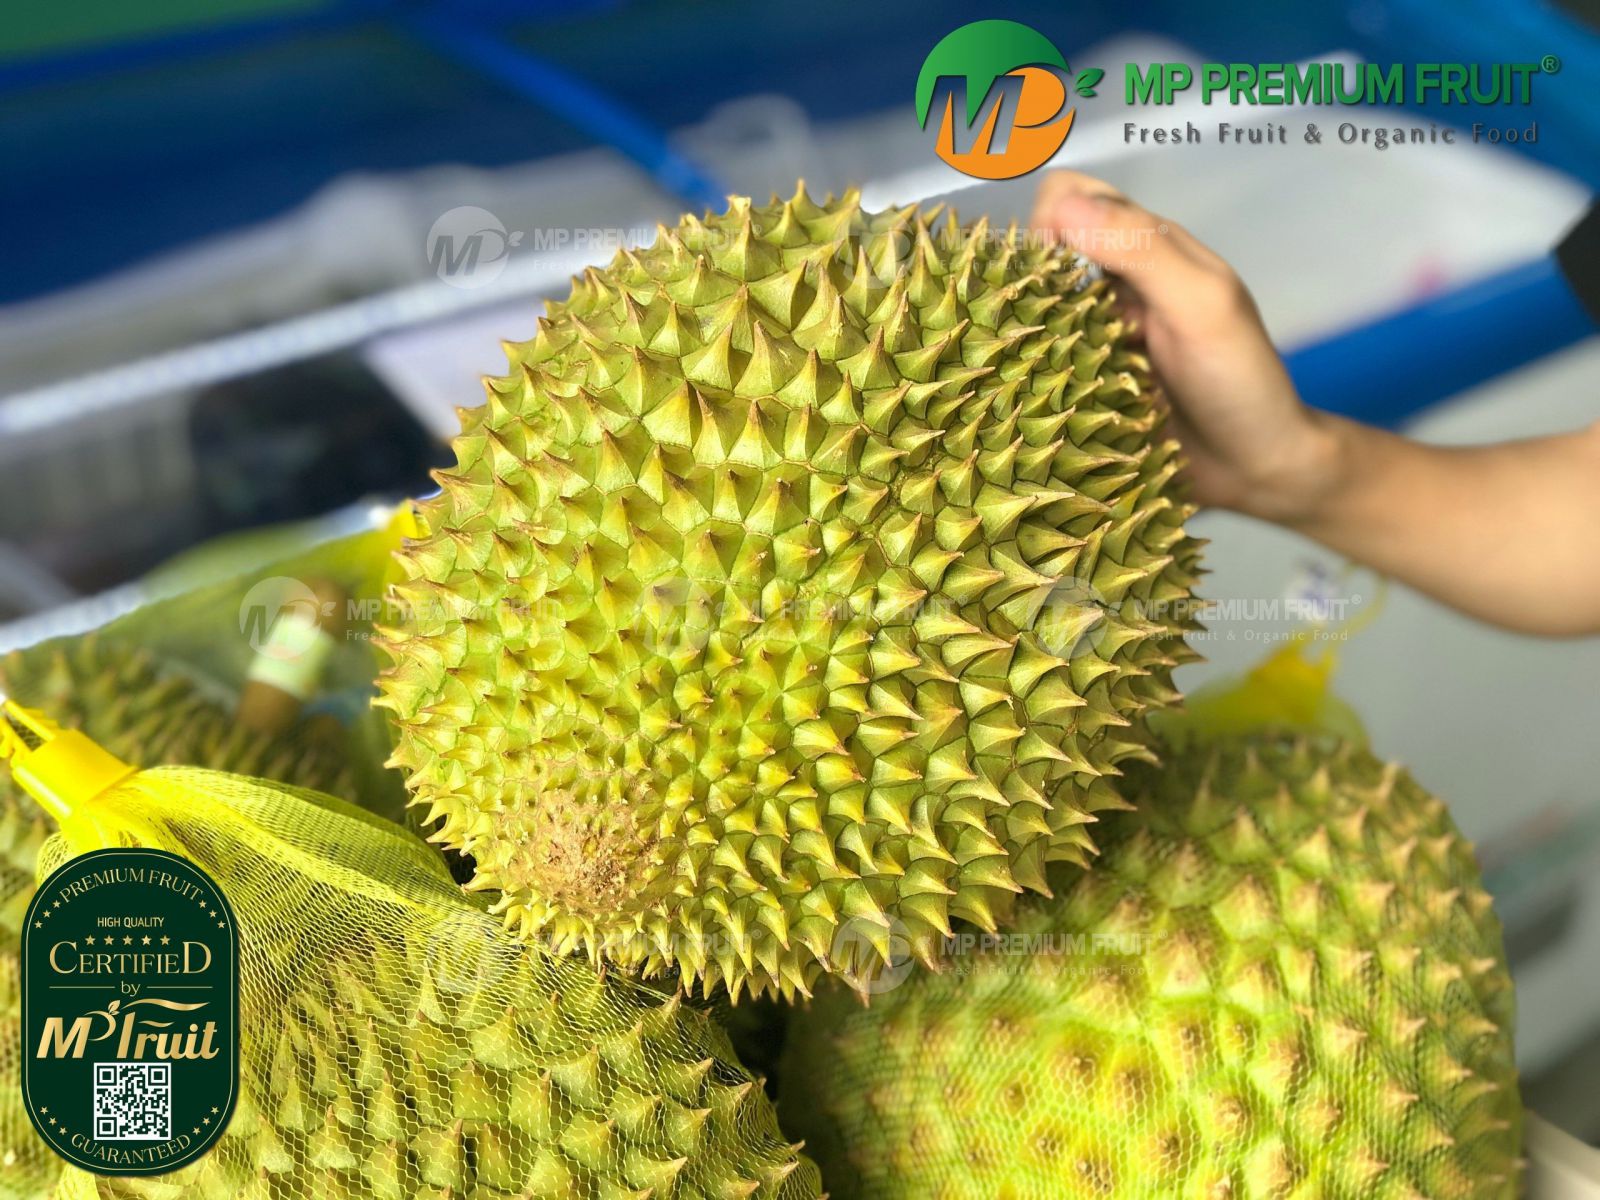 Sầu Riêng Ri6 Food Network tại MP Fruit